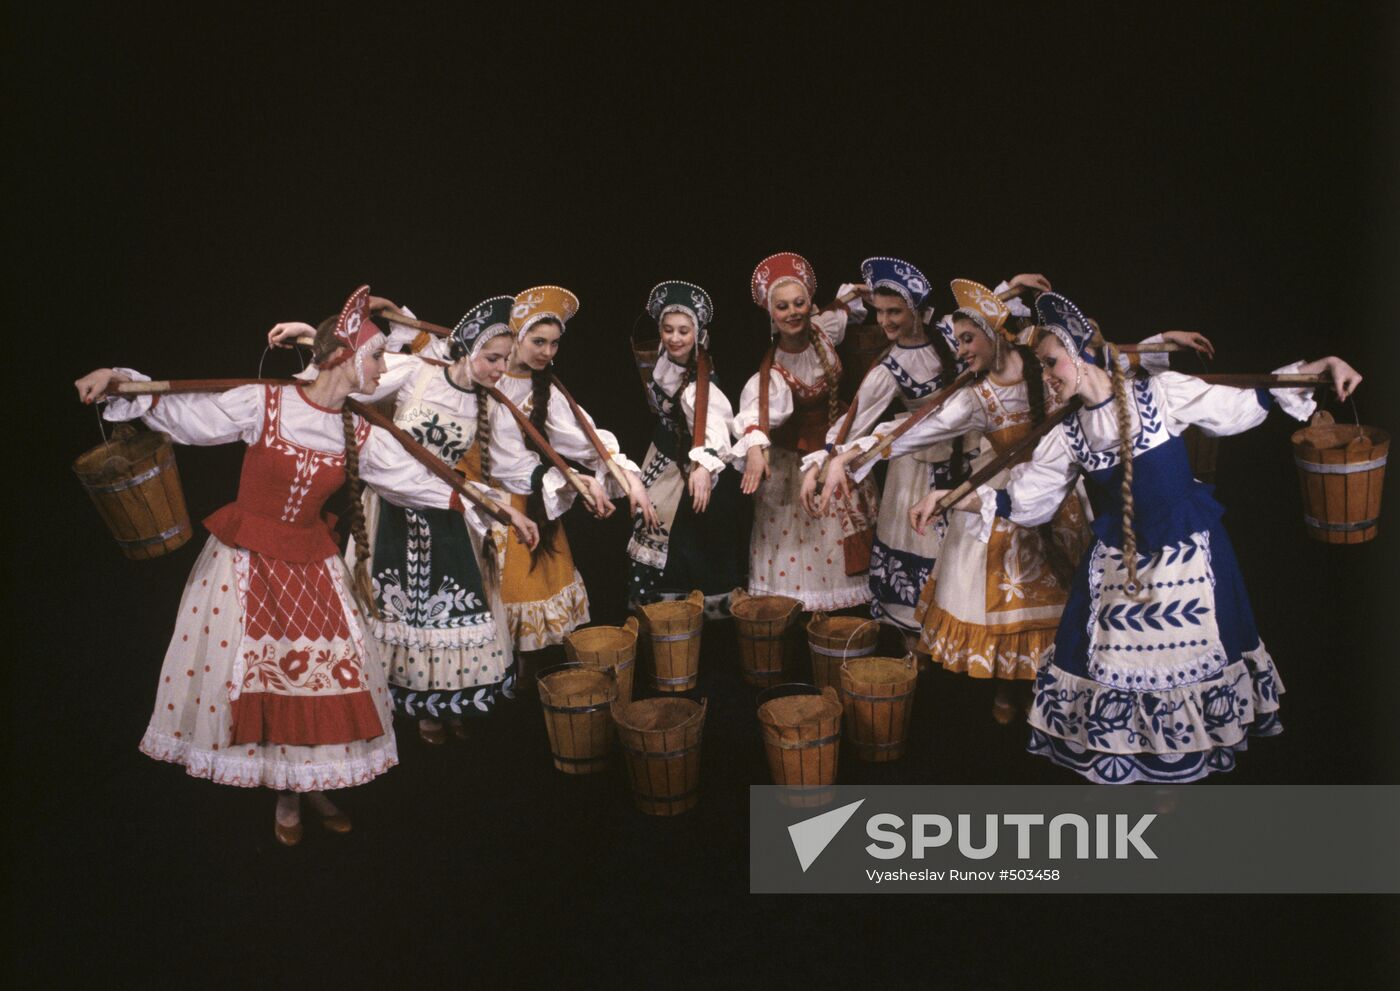 Russian State Folk Dance Group members